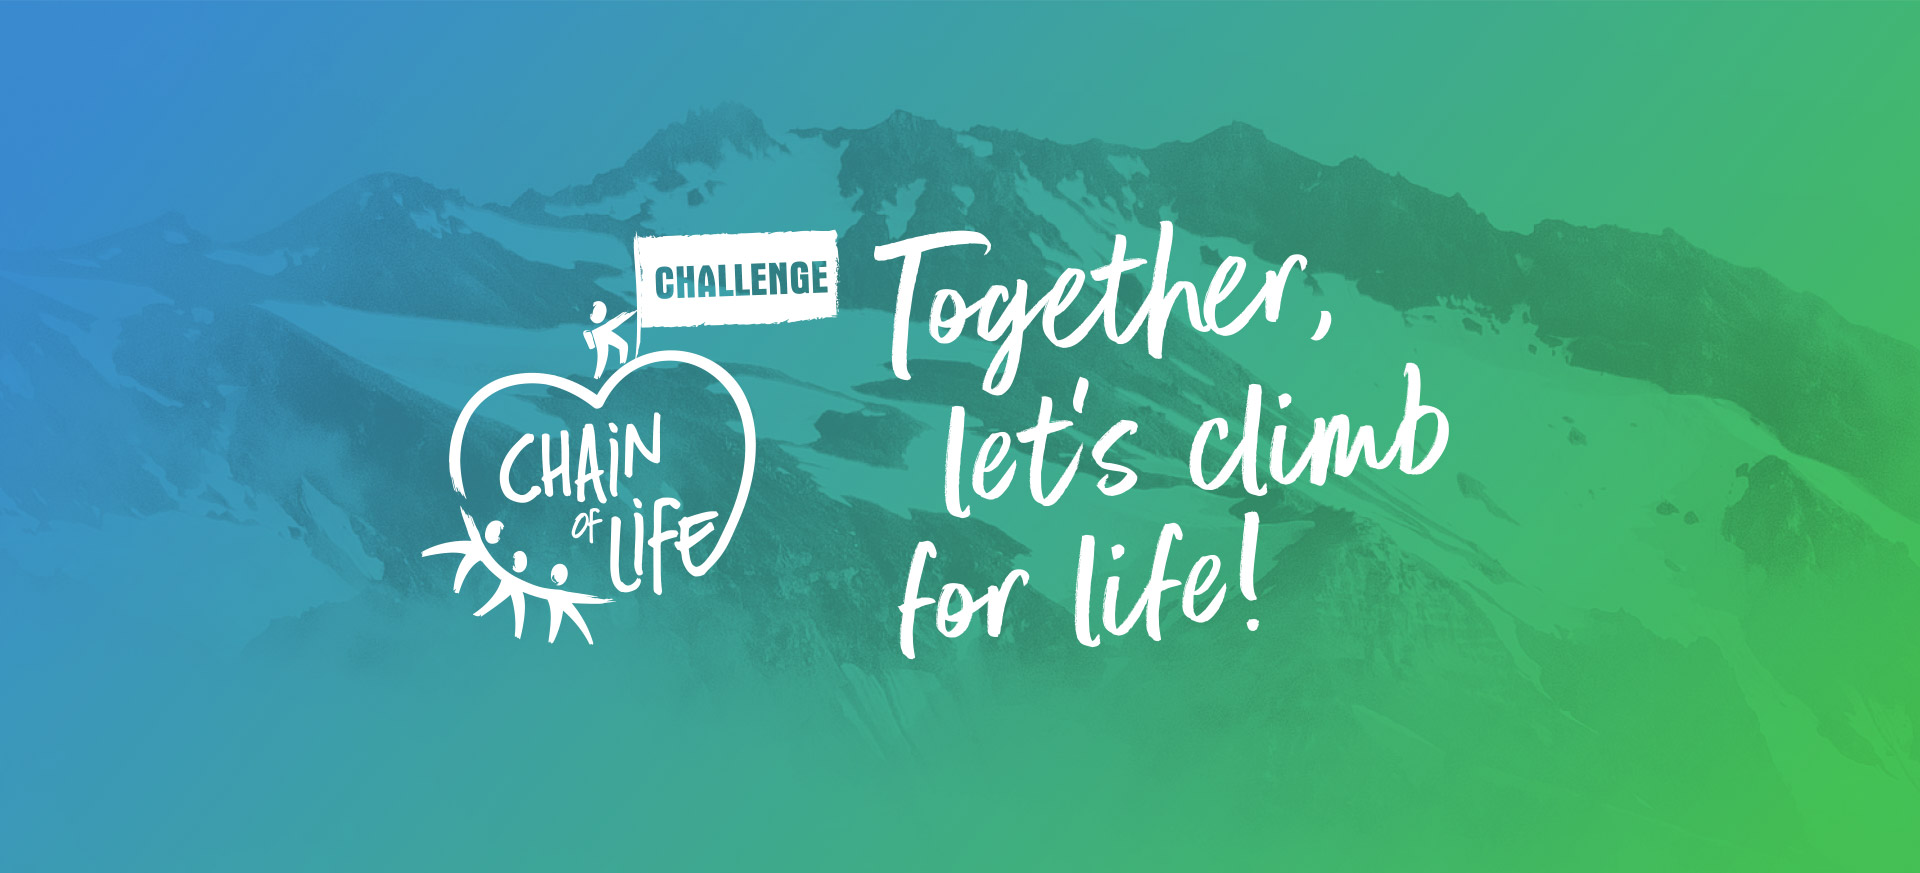 2021 Chain of Life Challenge